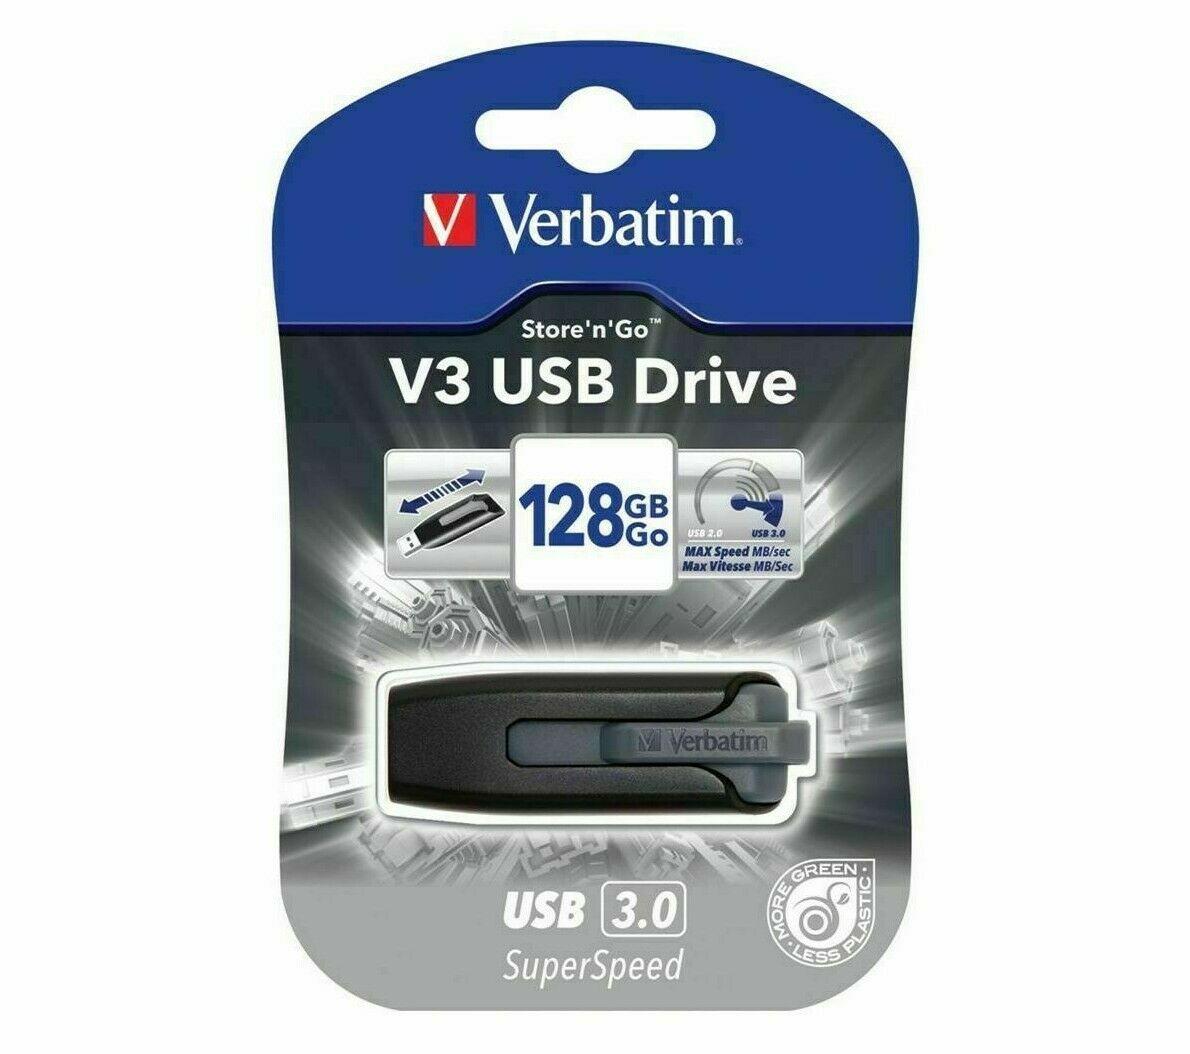 Verbatim 128GB Store n Go V3 USB 3.0 Drive